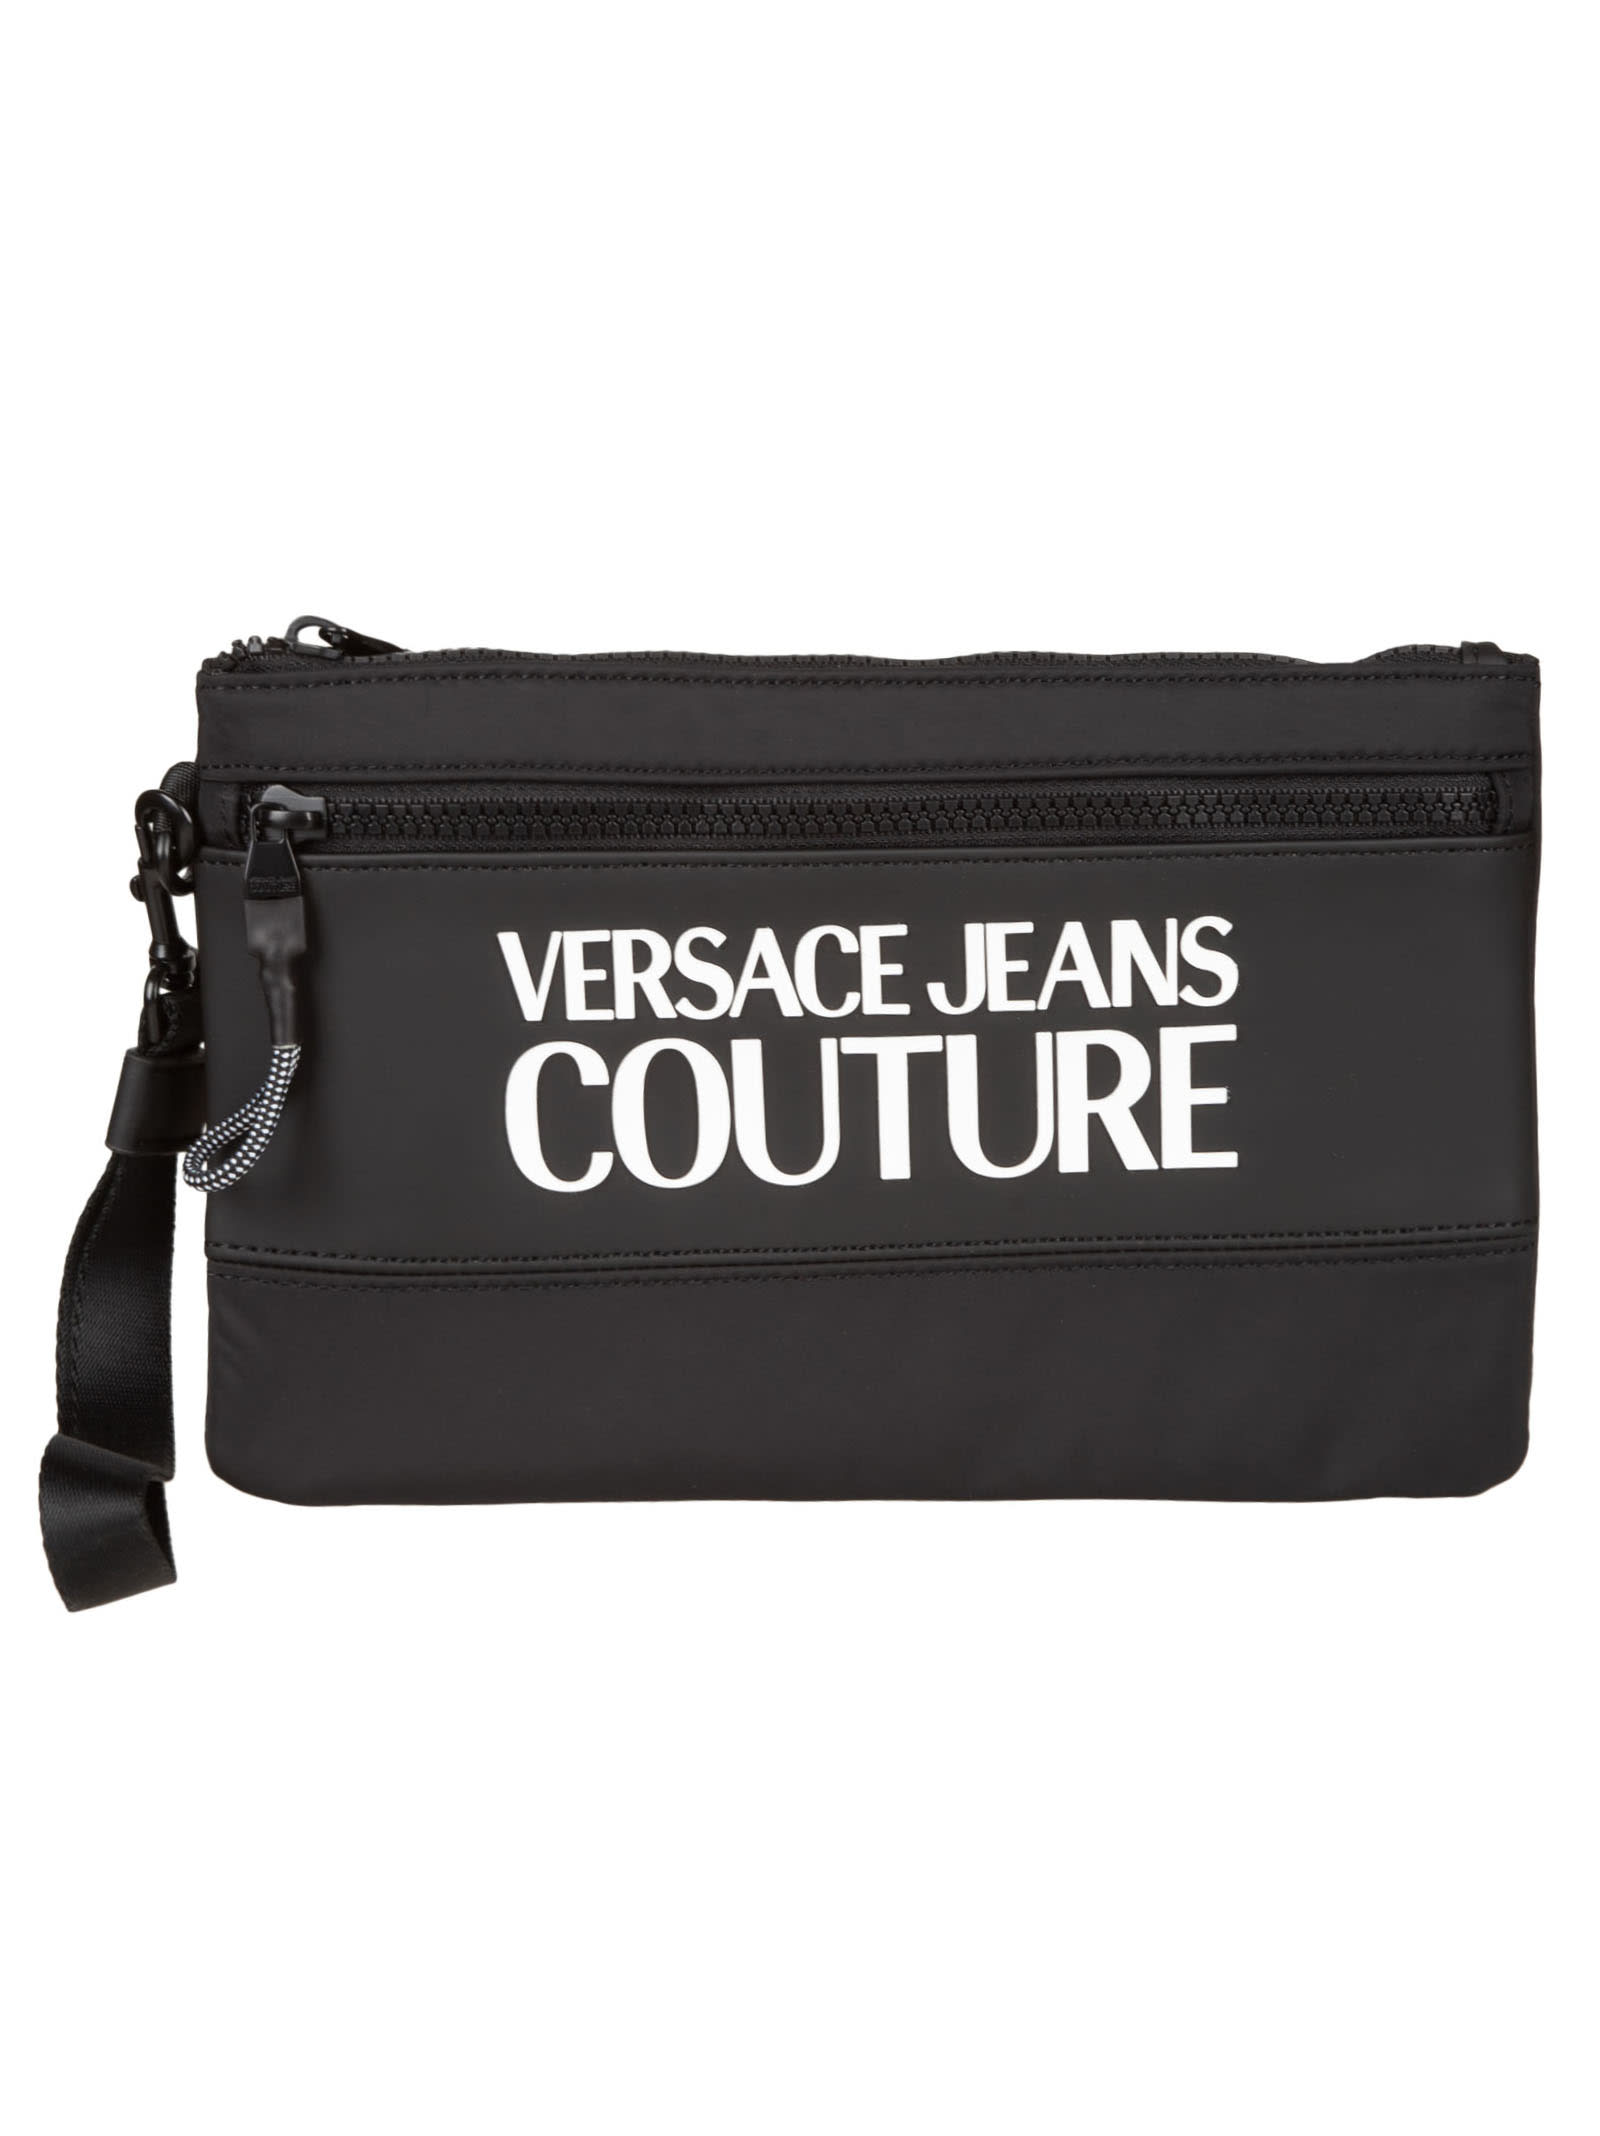 Versace Jeans Couture Logo Print Front Pocket Clutch